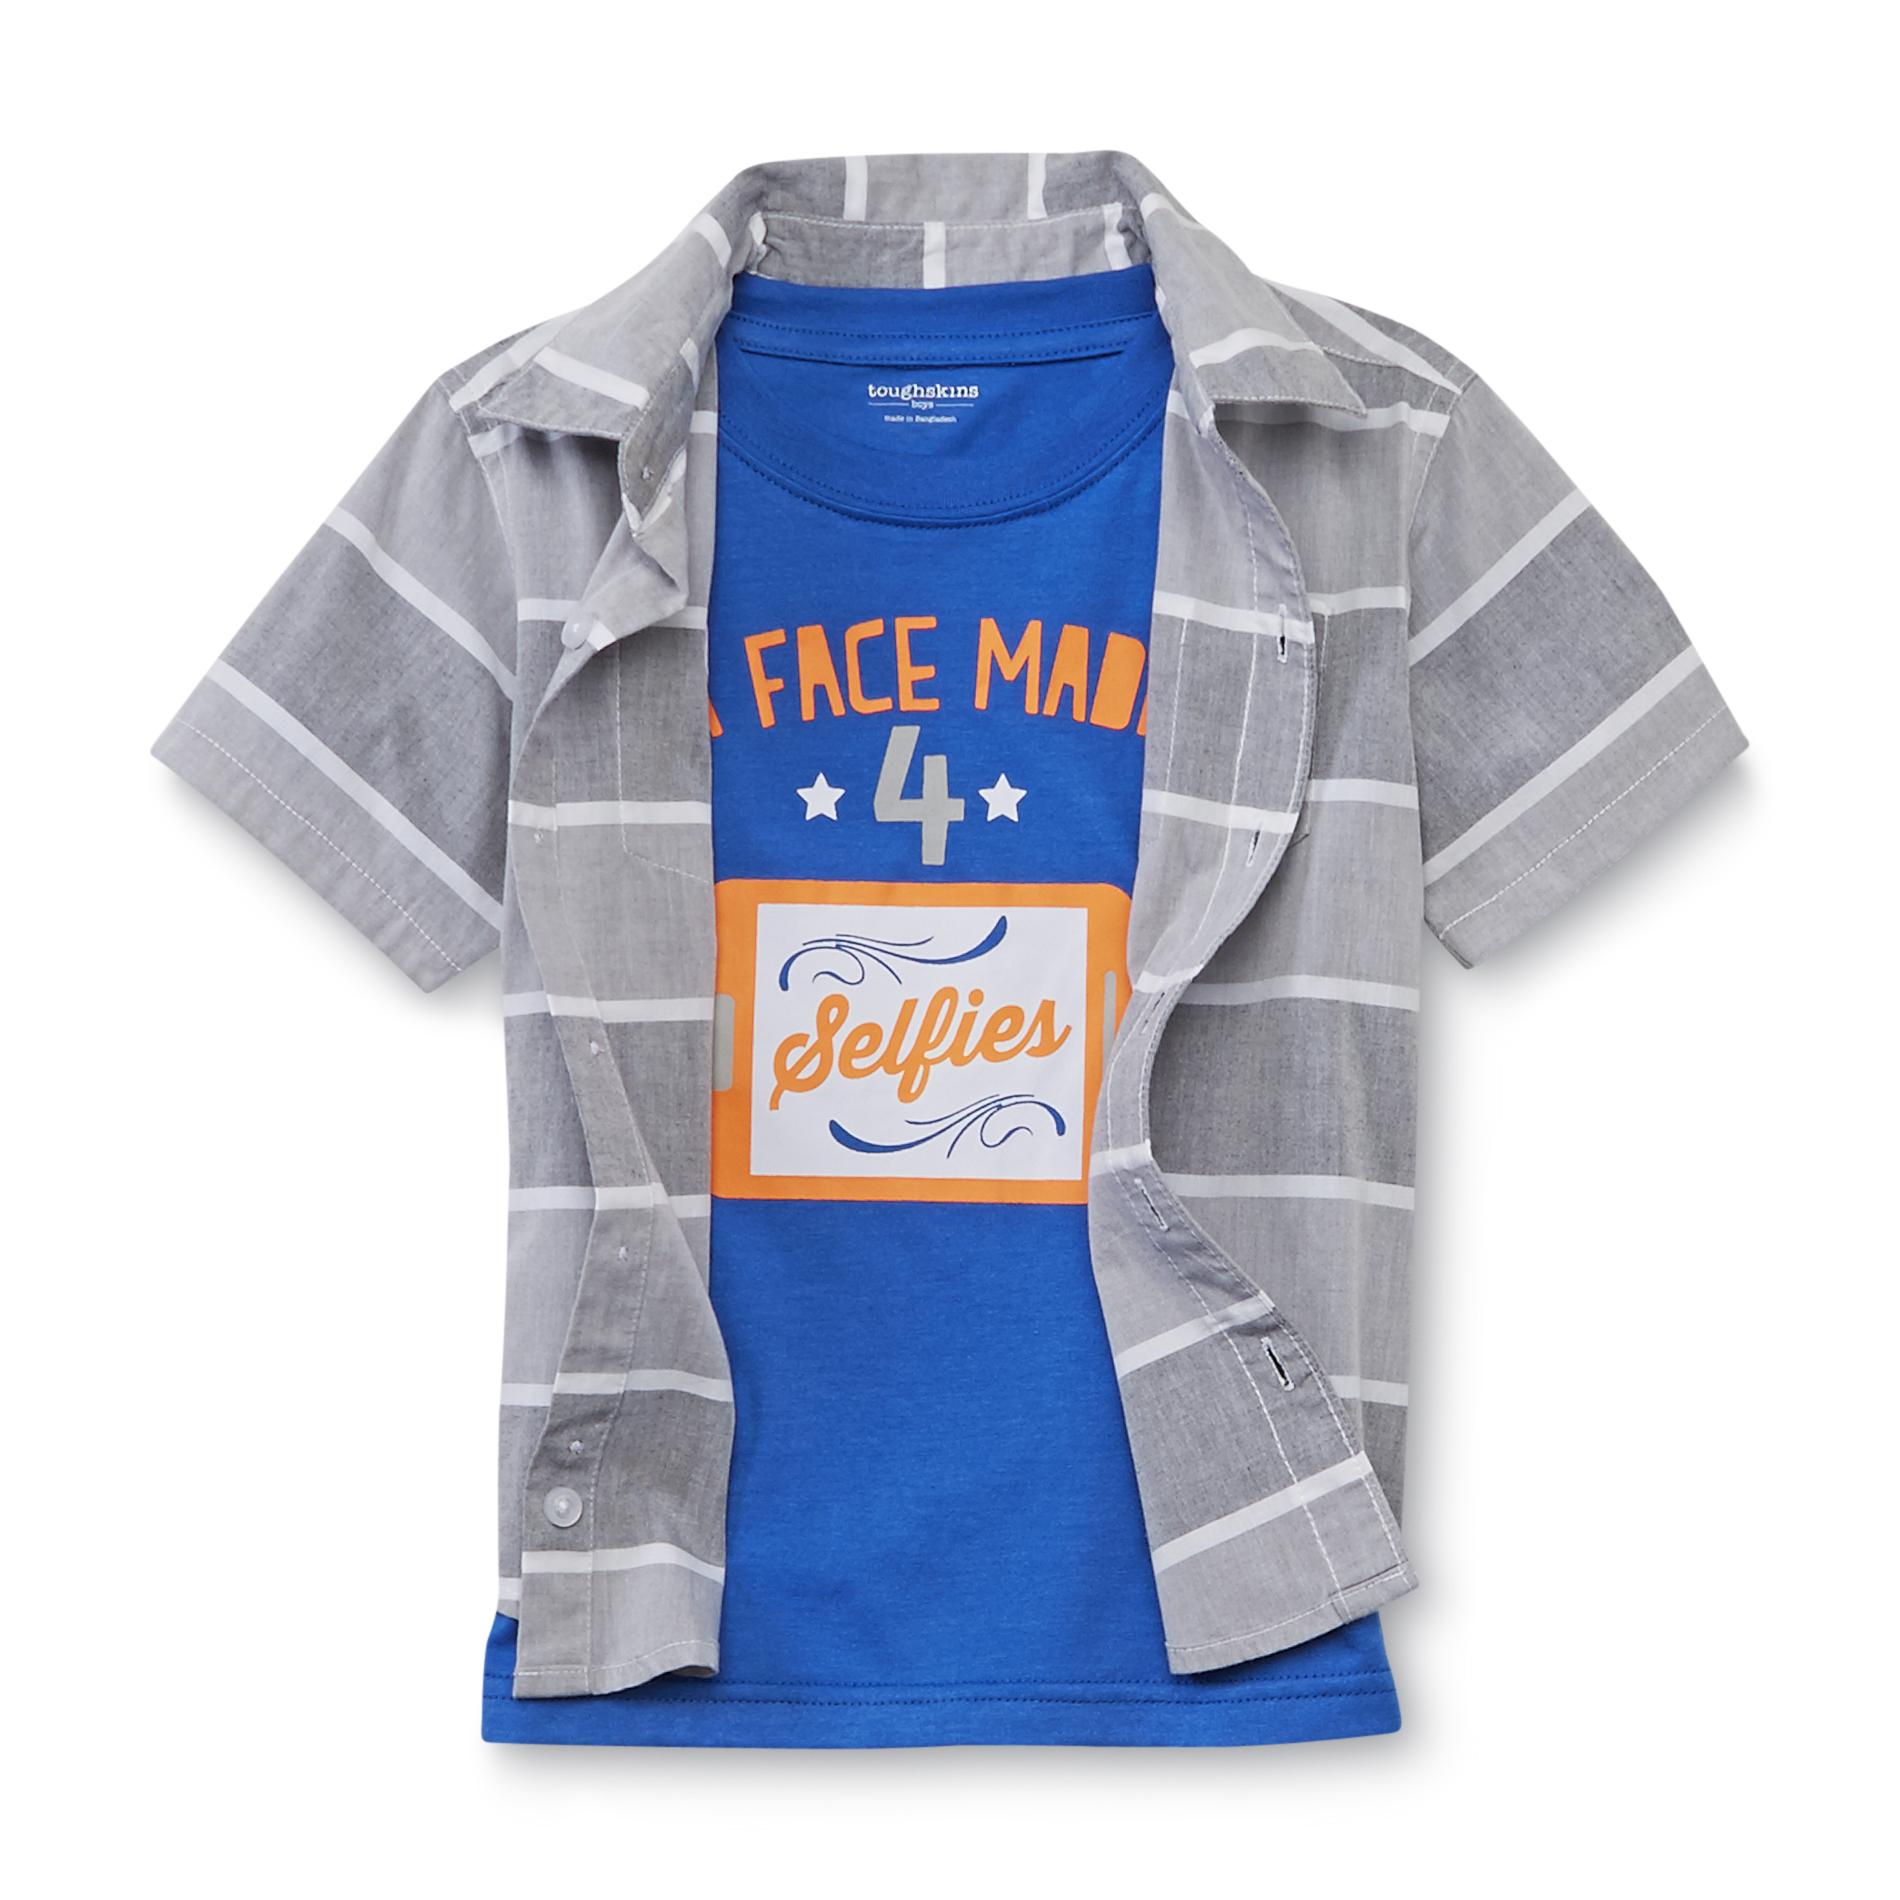 Toughskins Infant & Toddler Boy's Camp Shirt & T-Shirt - Selfies